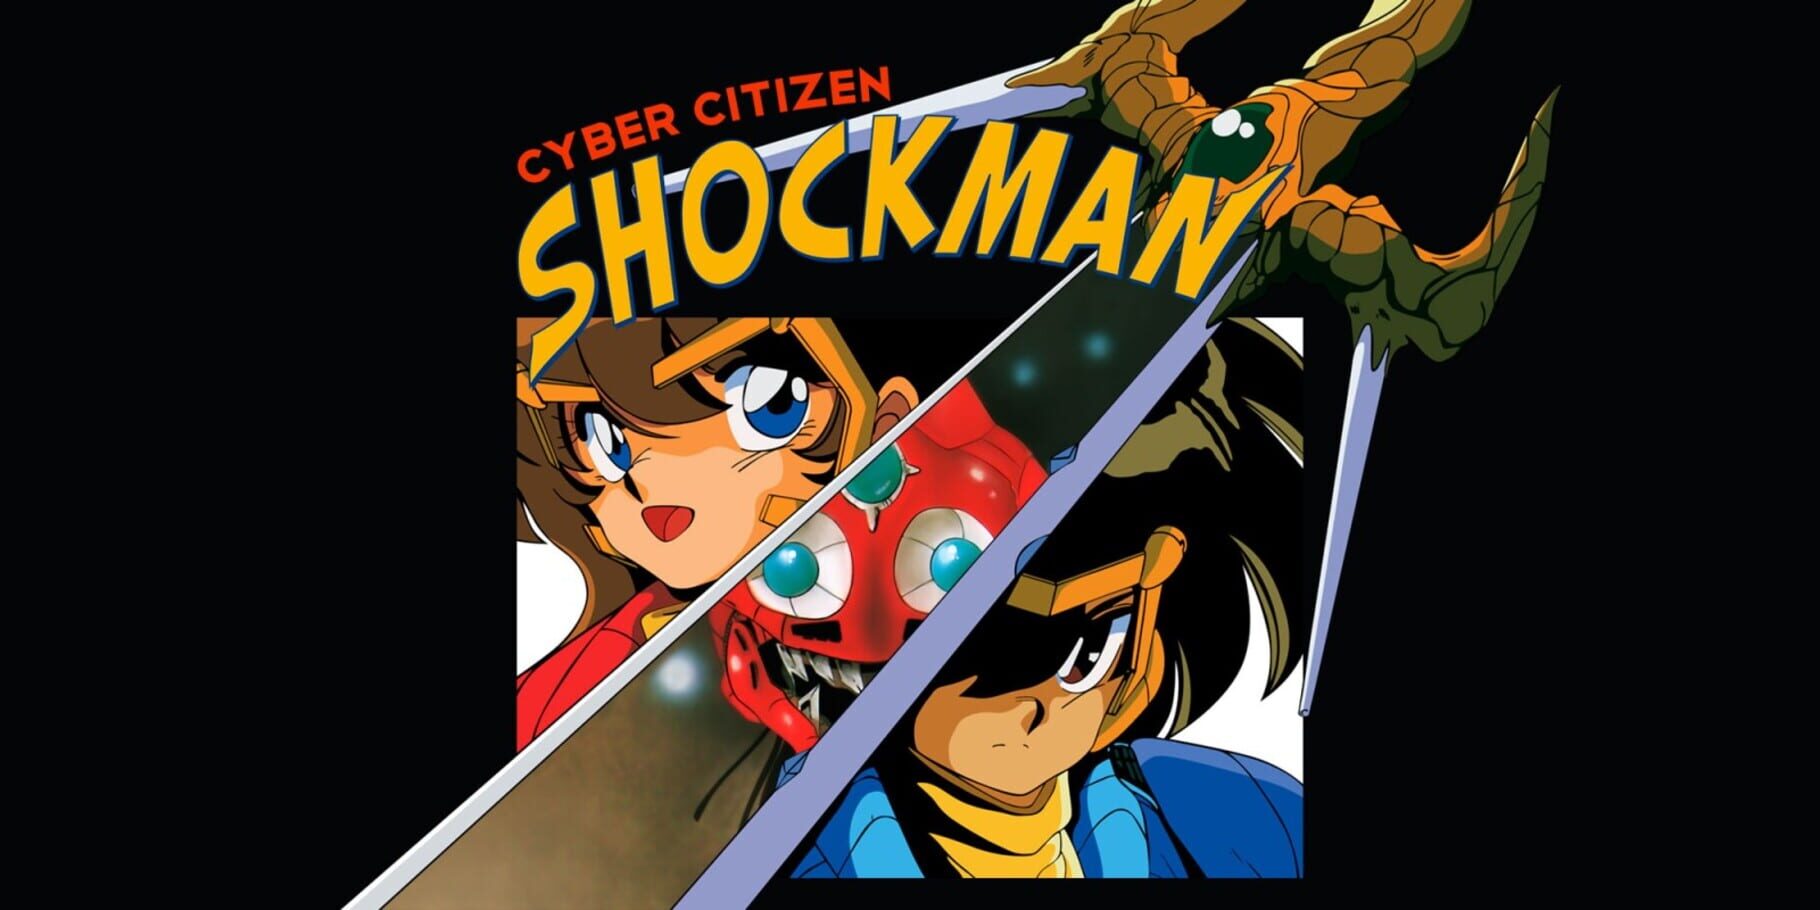 Cyber Citizen Shockman artwork